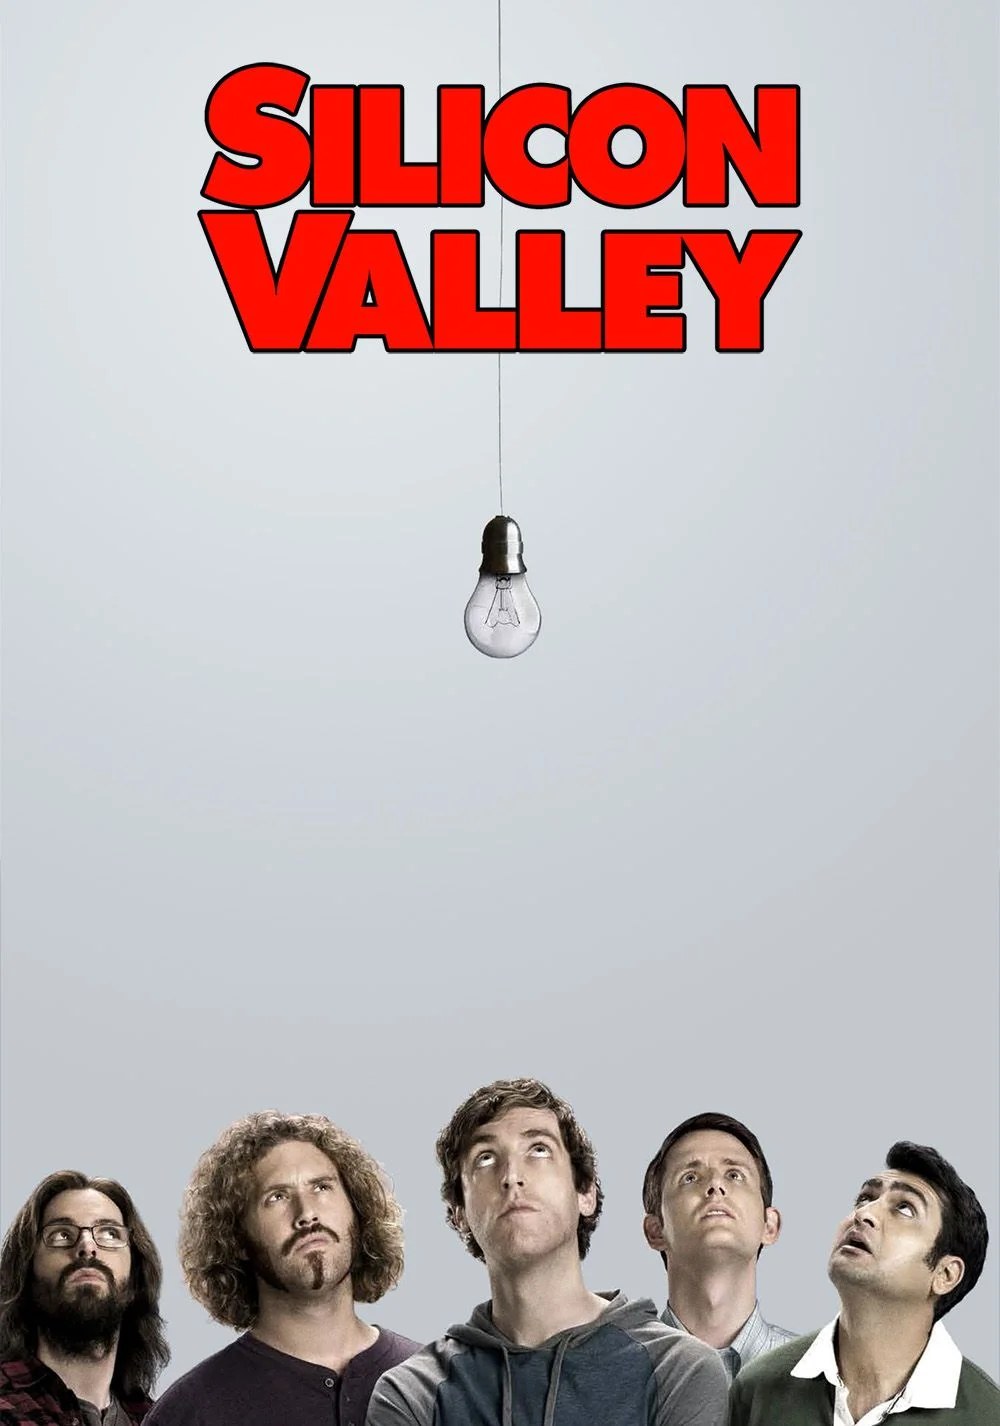 Silicon Valley Cover